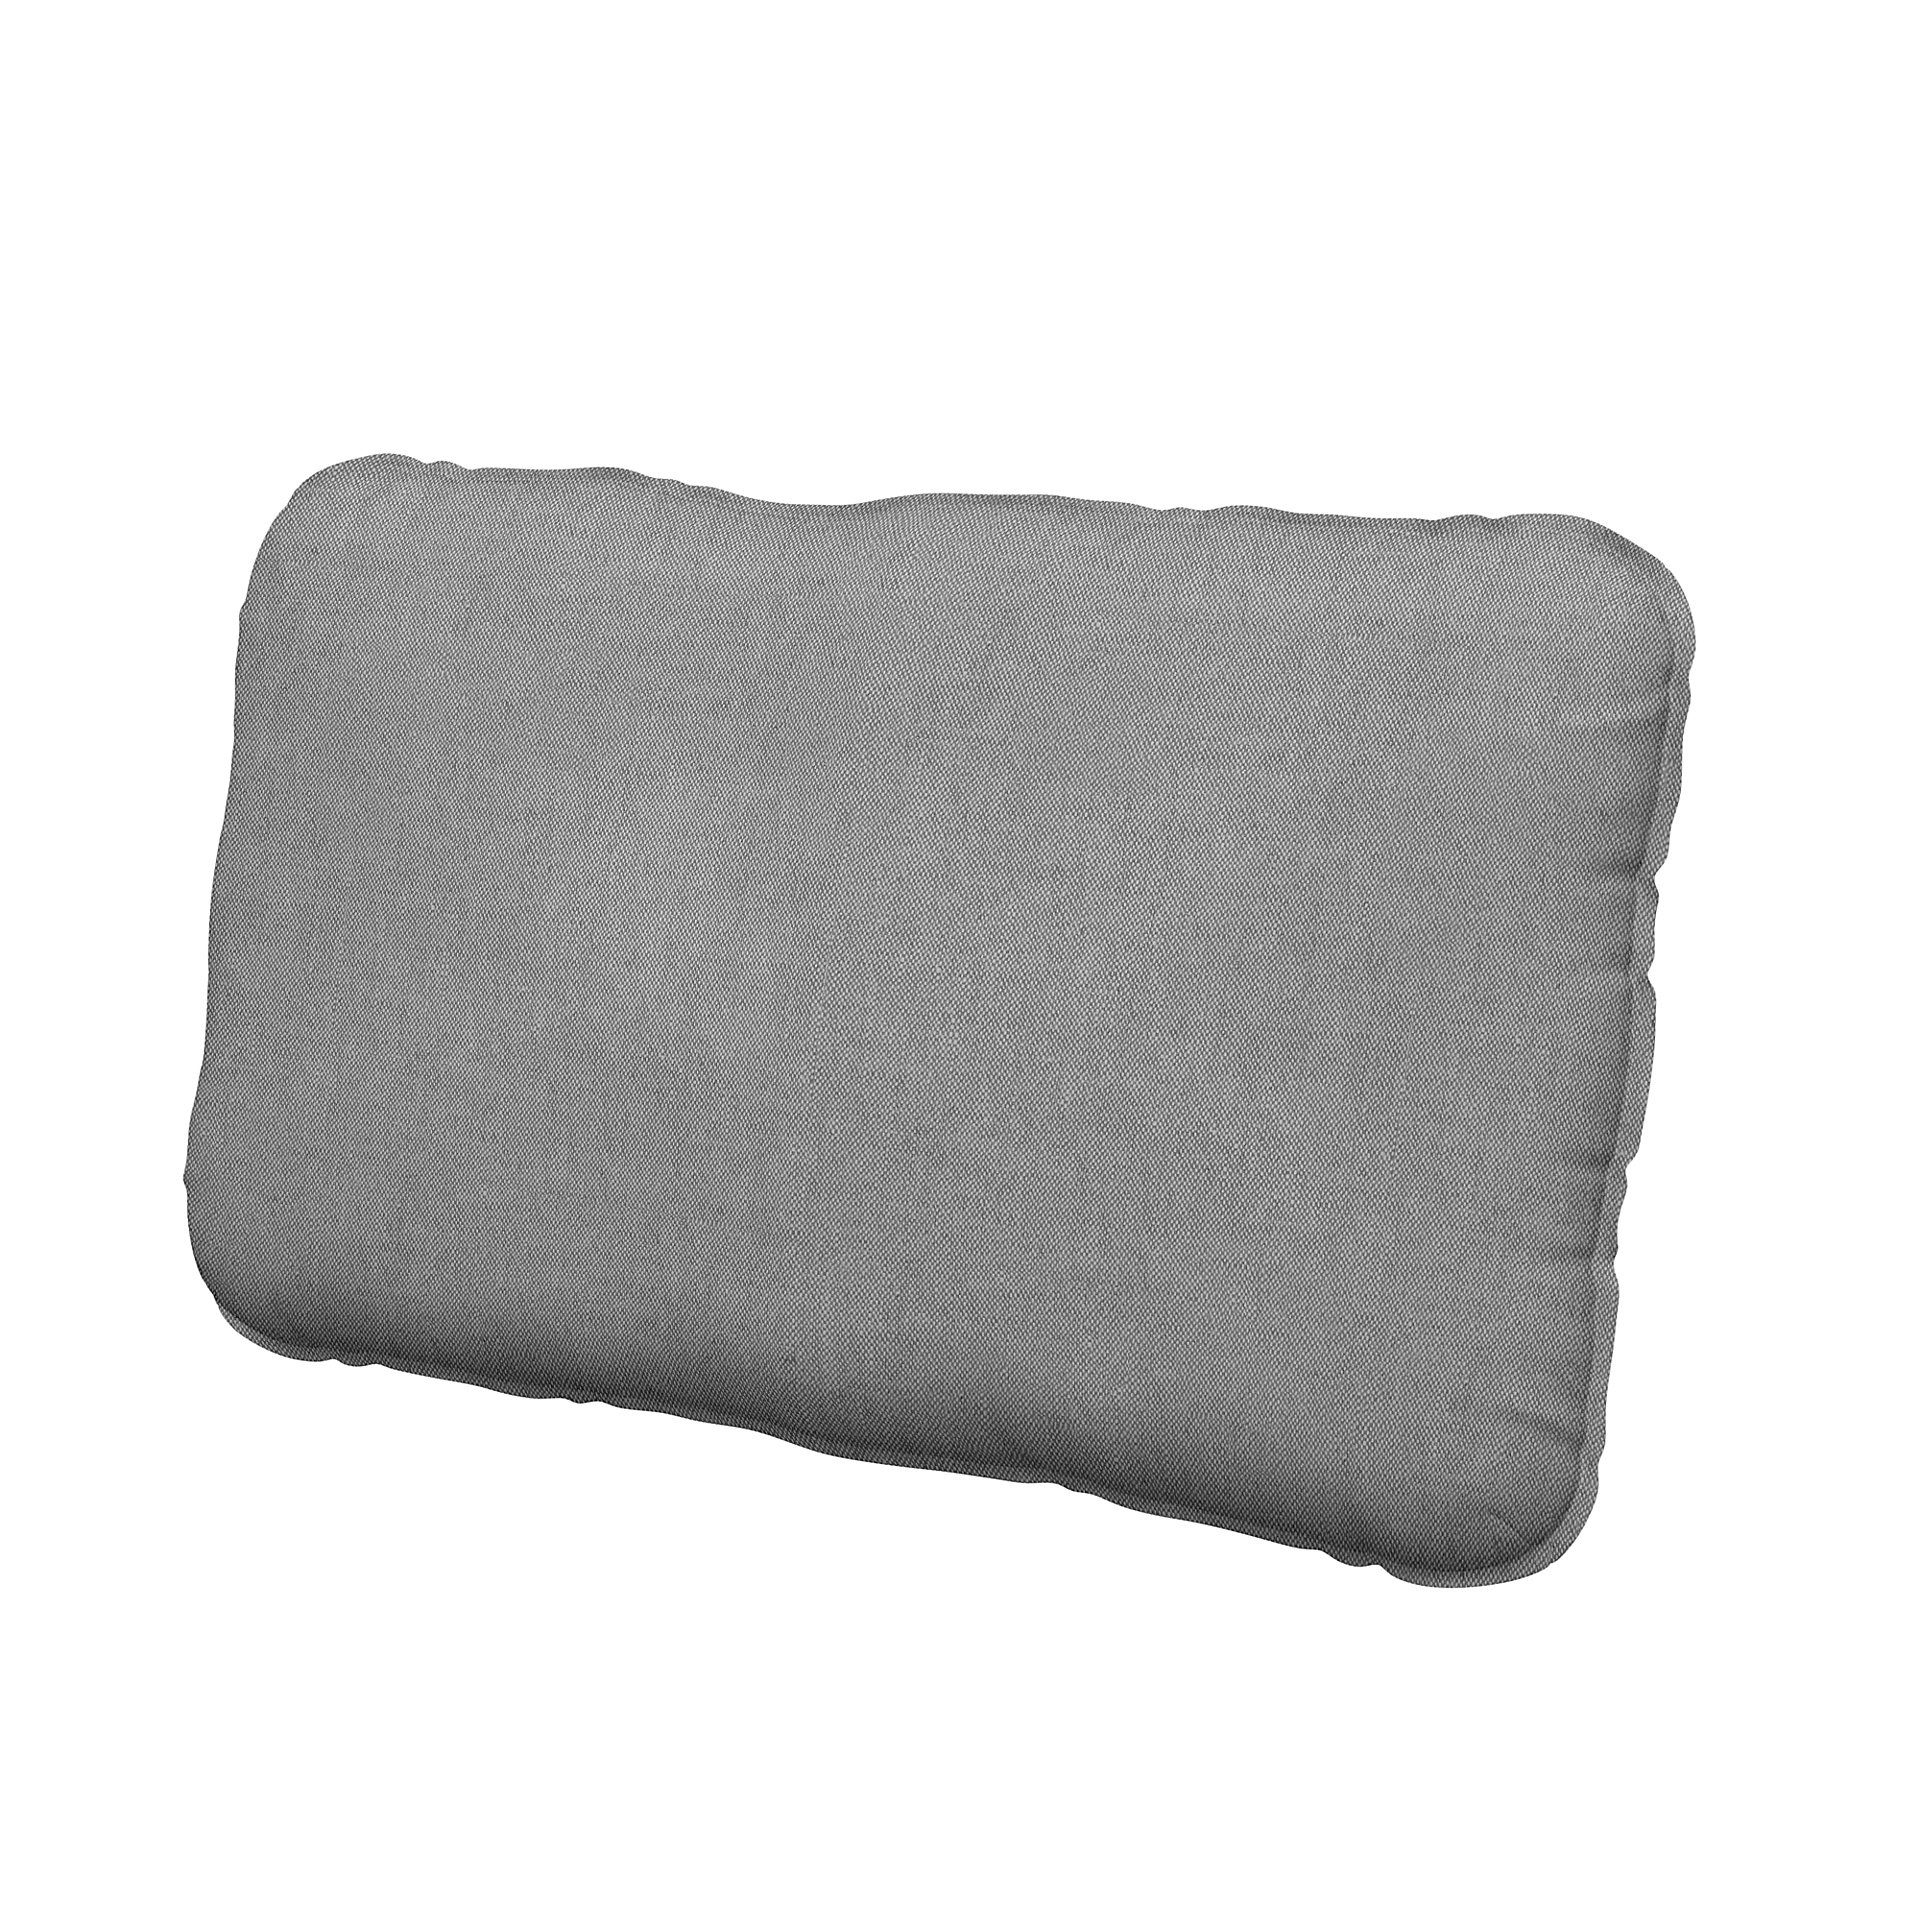 IKEA - Vallentuna back cushion cover 40x75cm, Graphite, Linen - Bemz